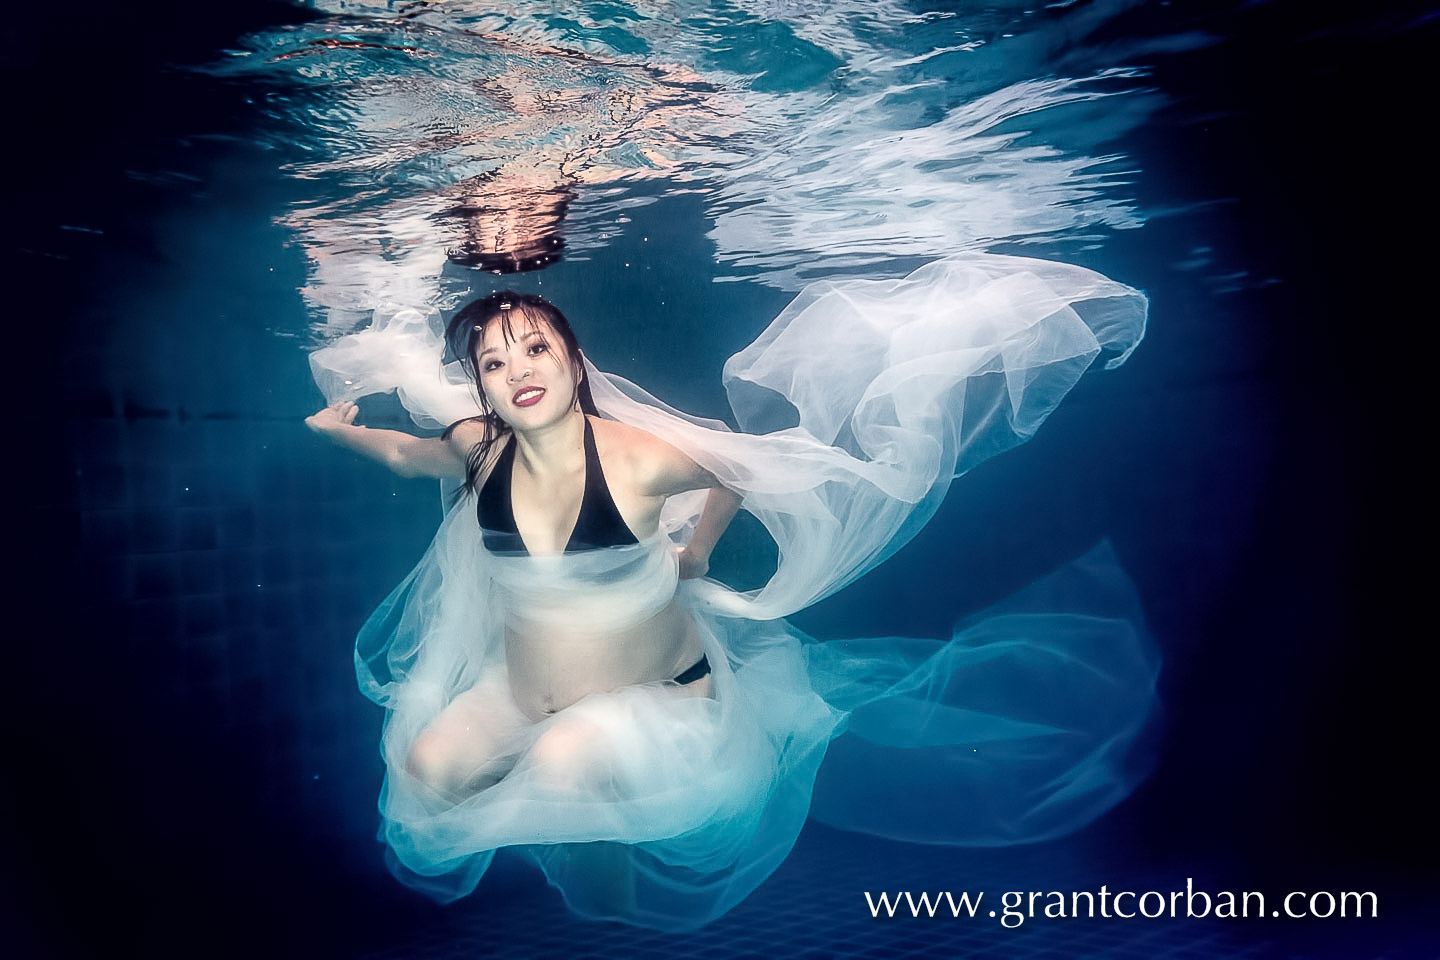 underwater pool pregnancy portrait photography in kuala lumpur